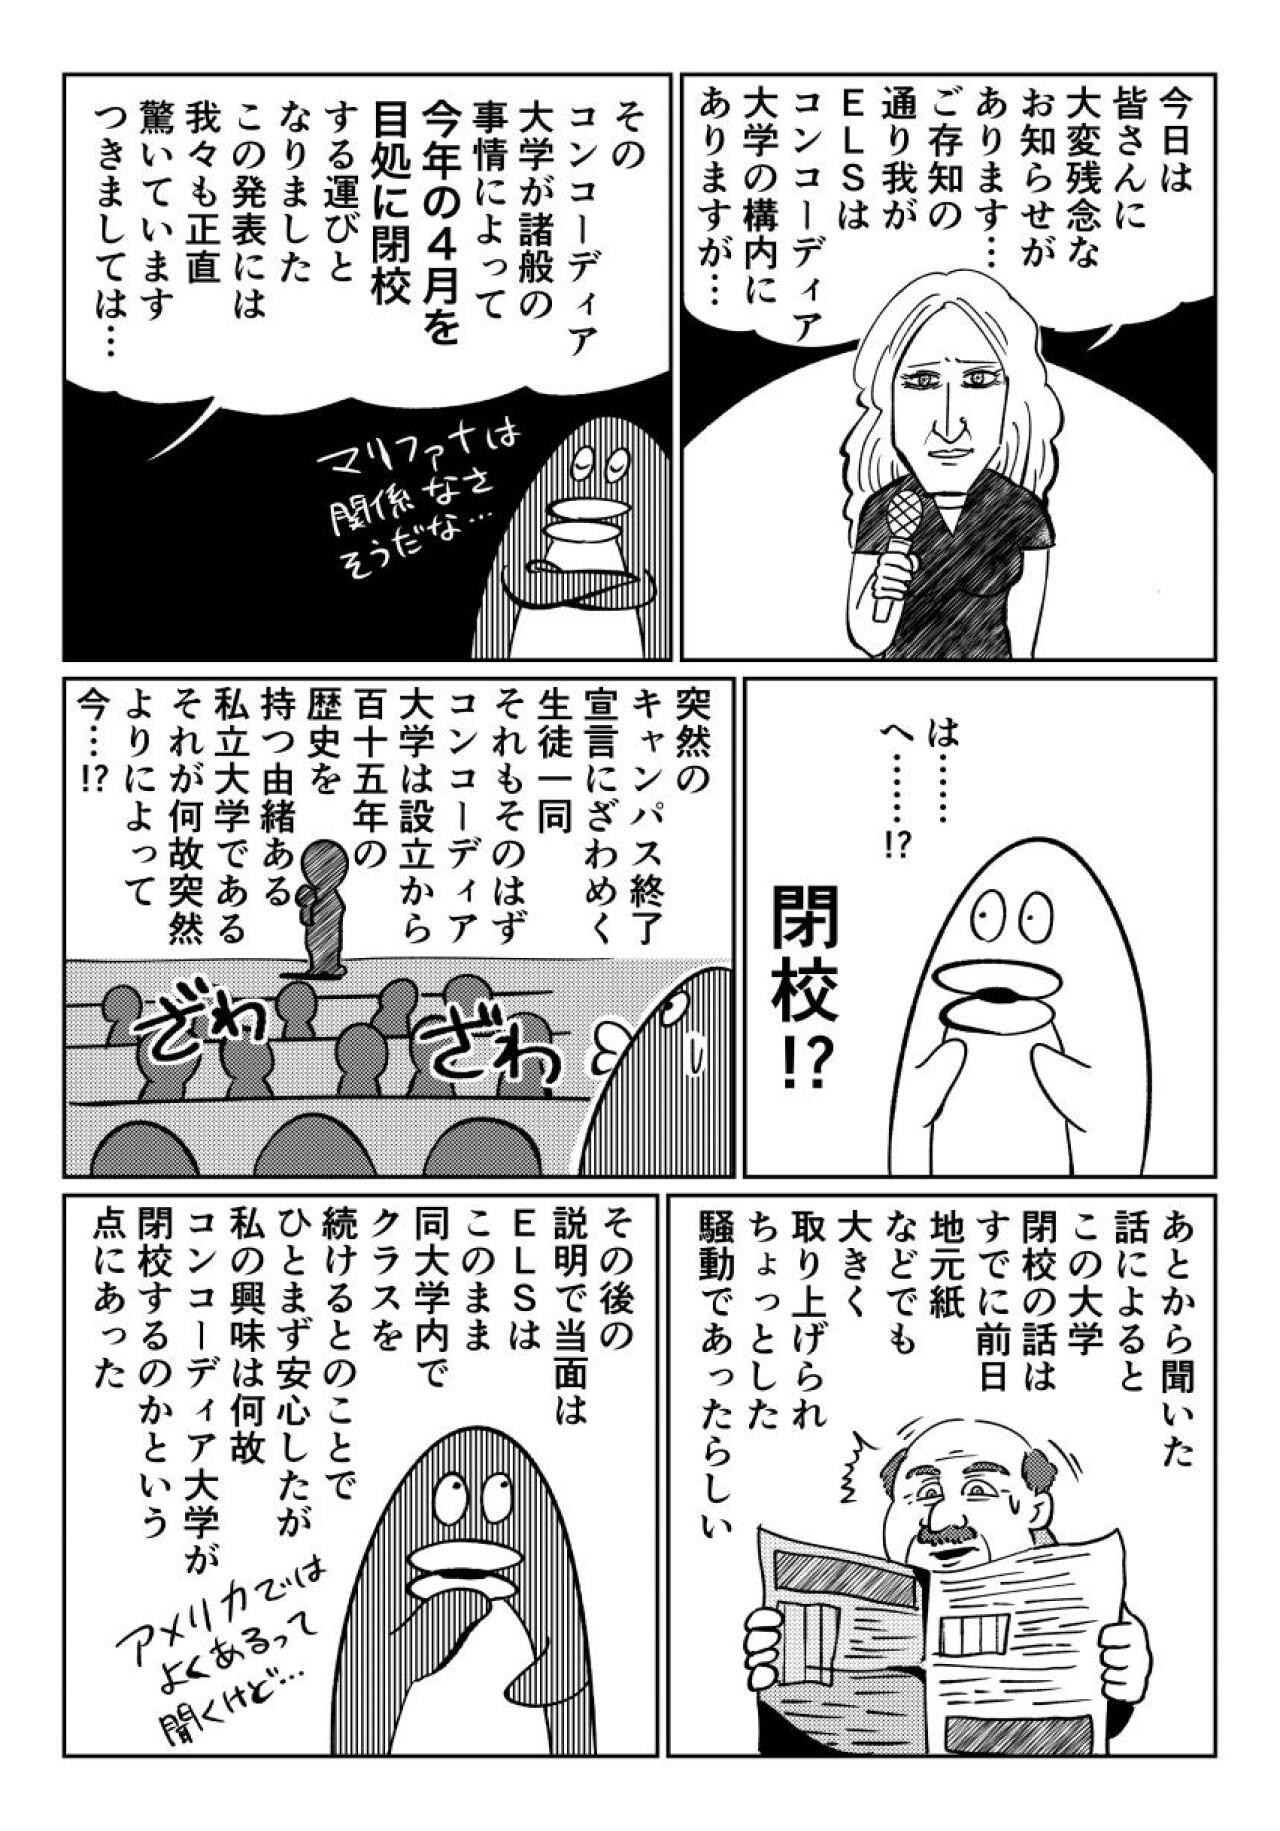 https://www.ryugaku.co.jp/column/images/34sai12_2_1280.jpg